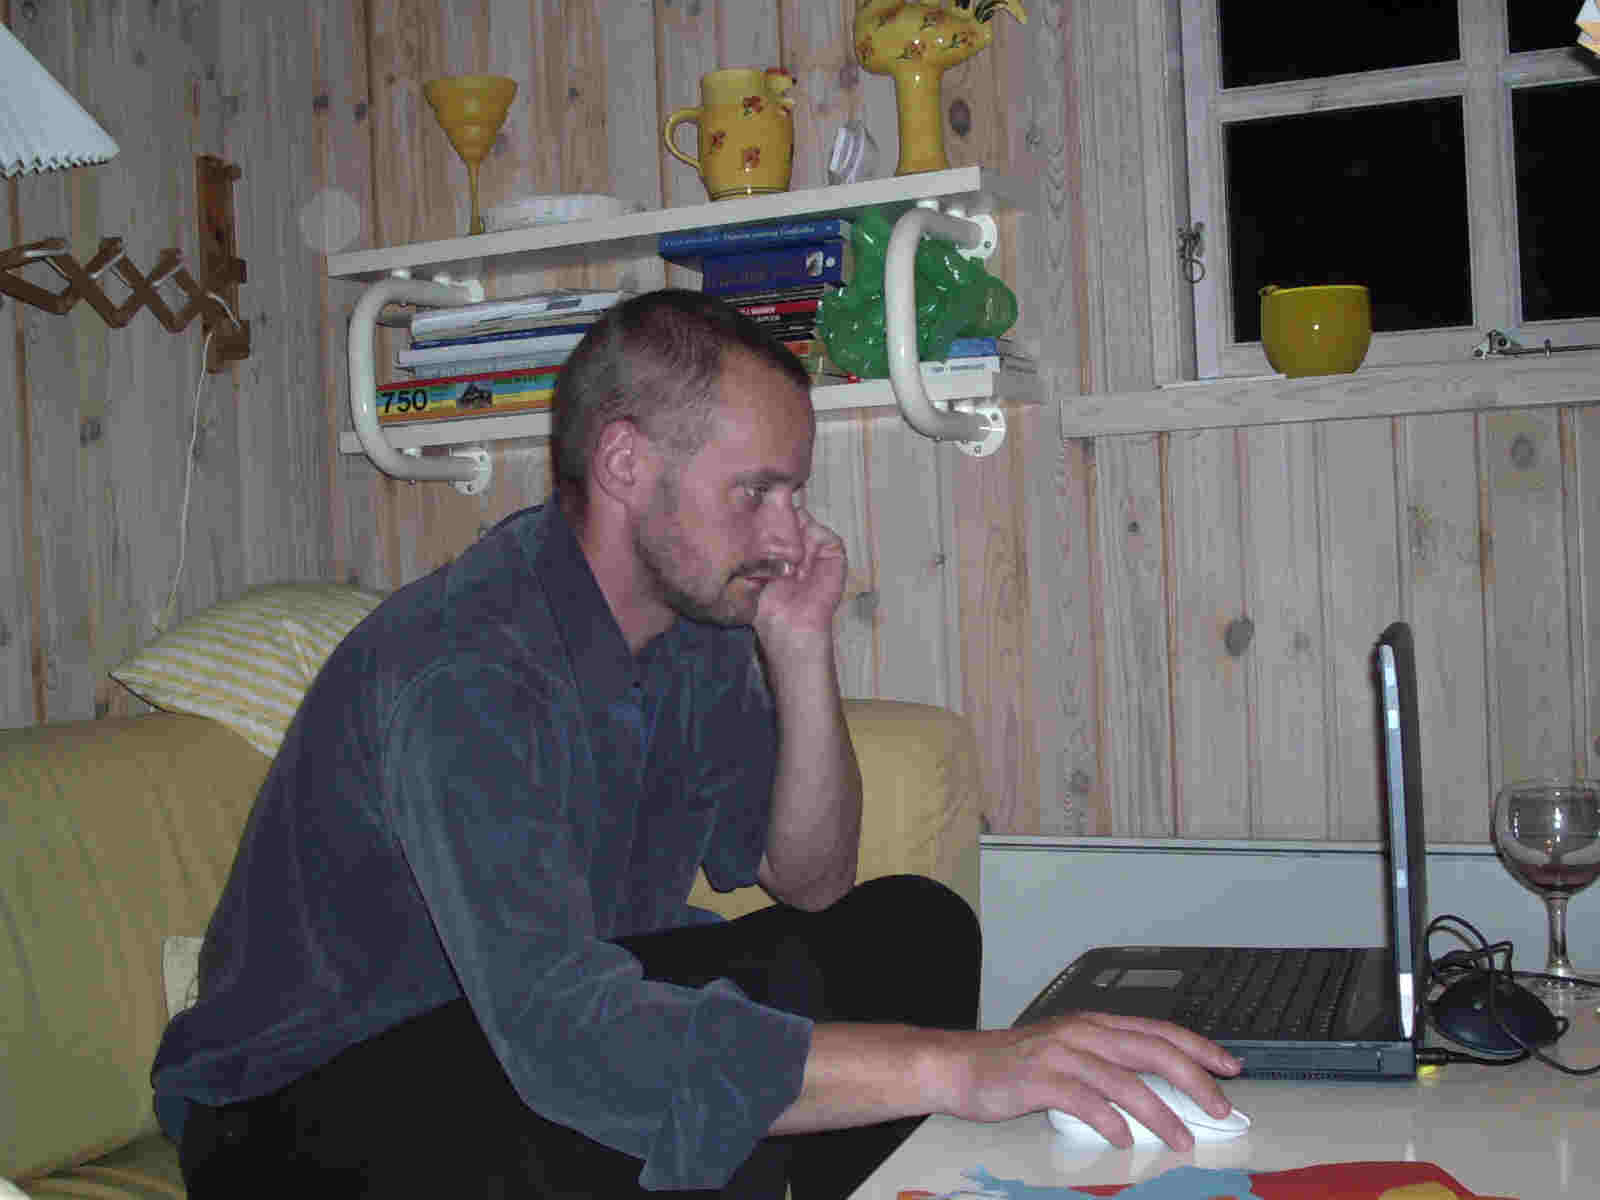 Christian p efterrsferie i vendsyssel - med sin brbare PC